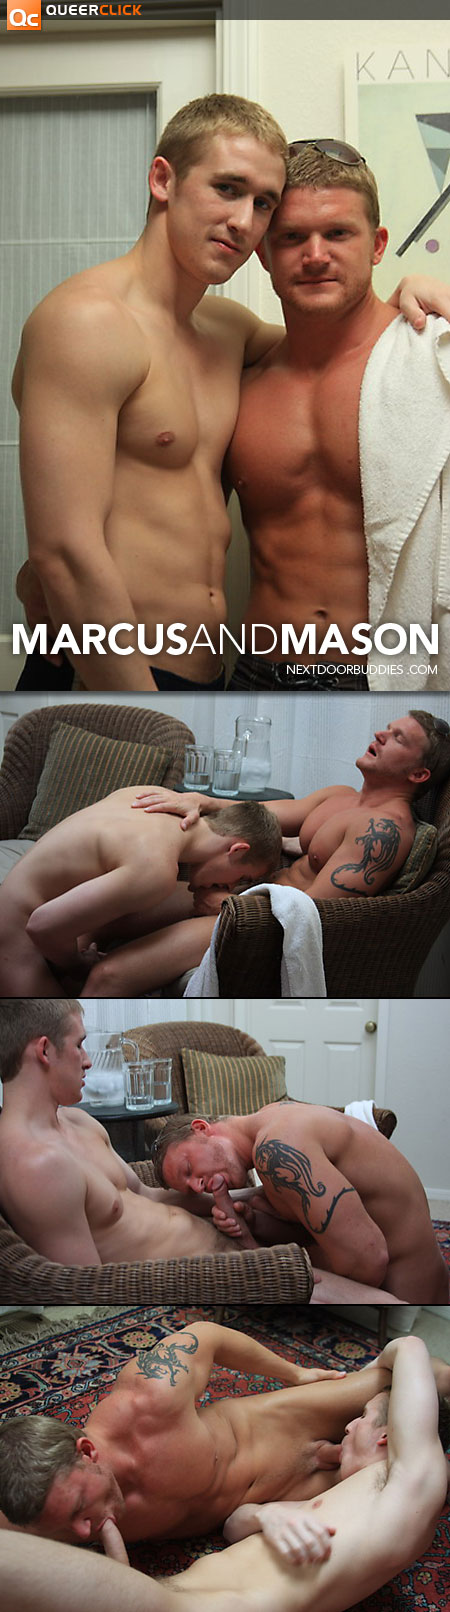 Marcus and Mason at NextDoorBuddies.com